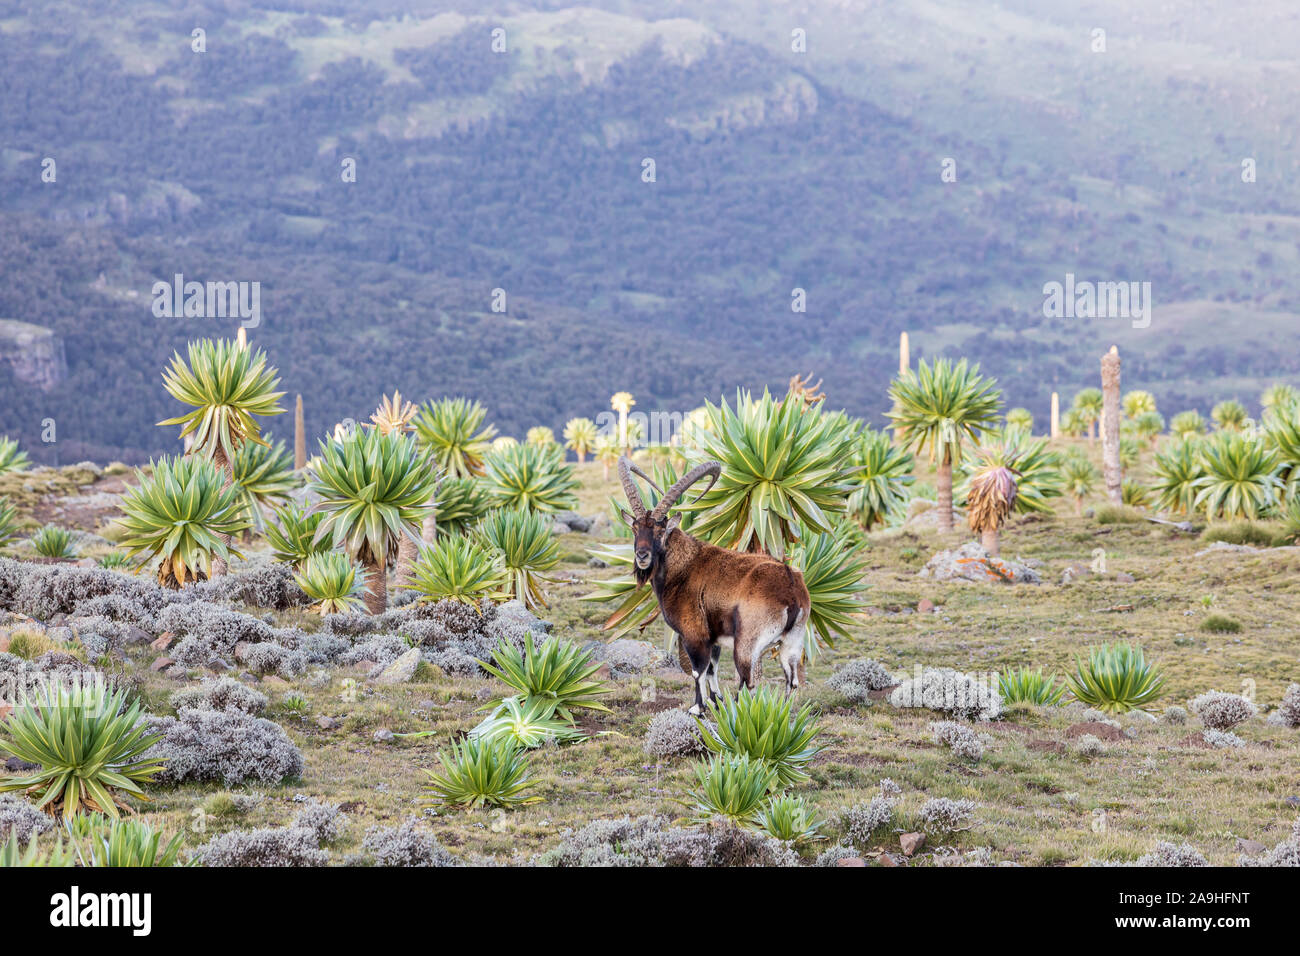 Ethiopia. Amhara. North Gondar. Walia Ibex among giant lobelia in the Ethiopian highlands. Stock Photo